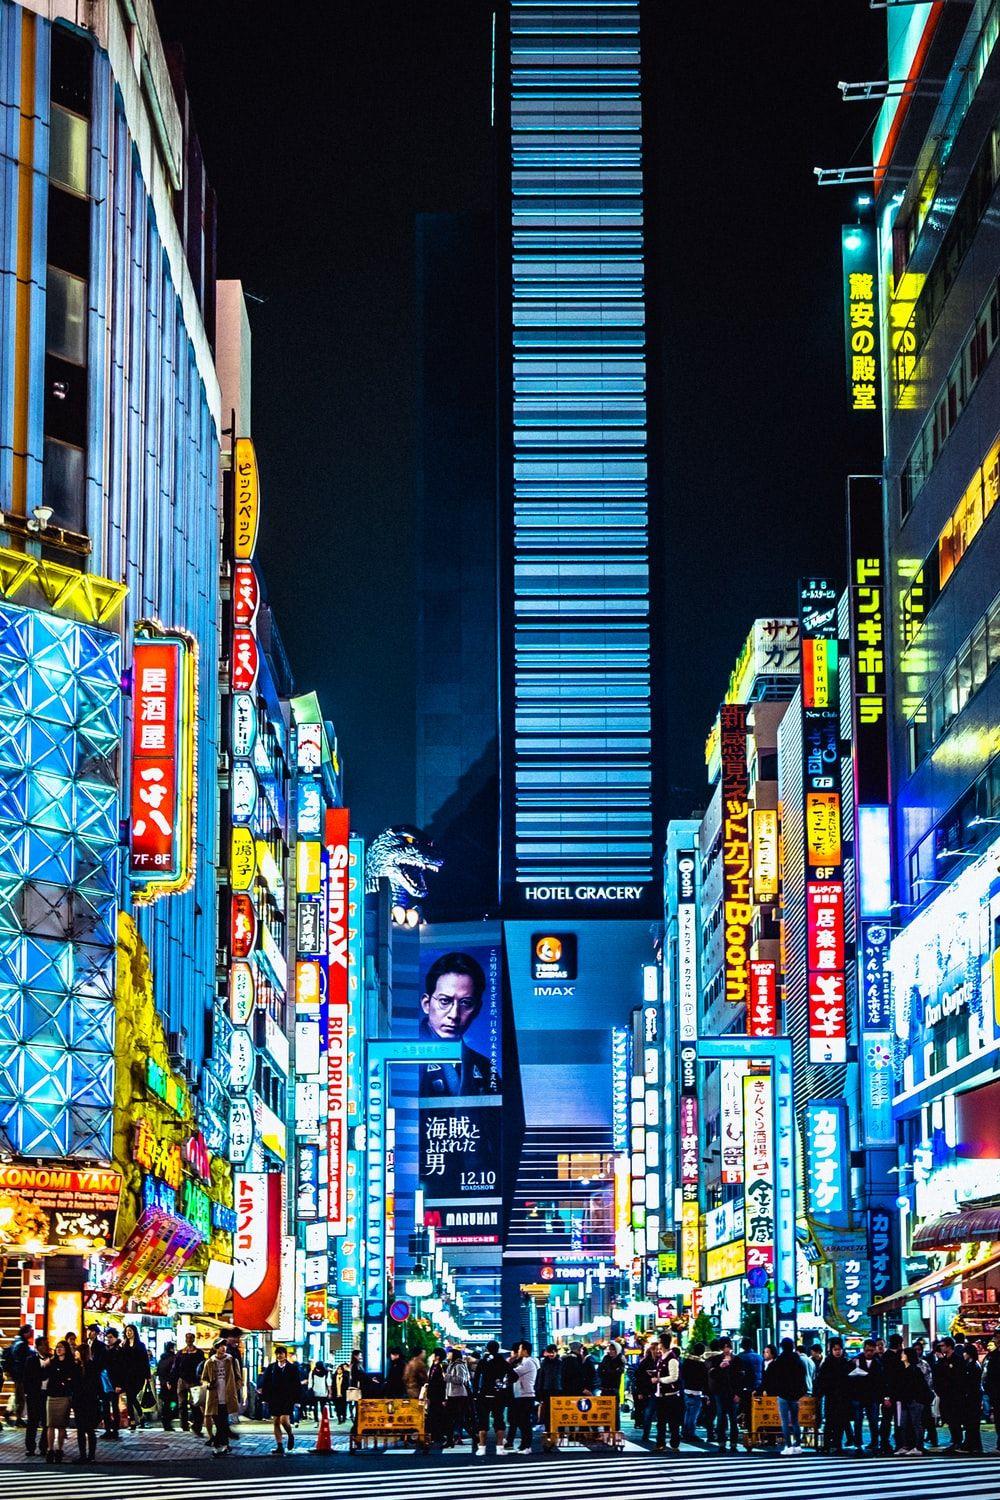 Tokyo iPhone Wallpapers - Top Free Tokyo iPhone Backgrounds ...